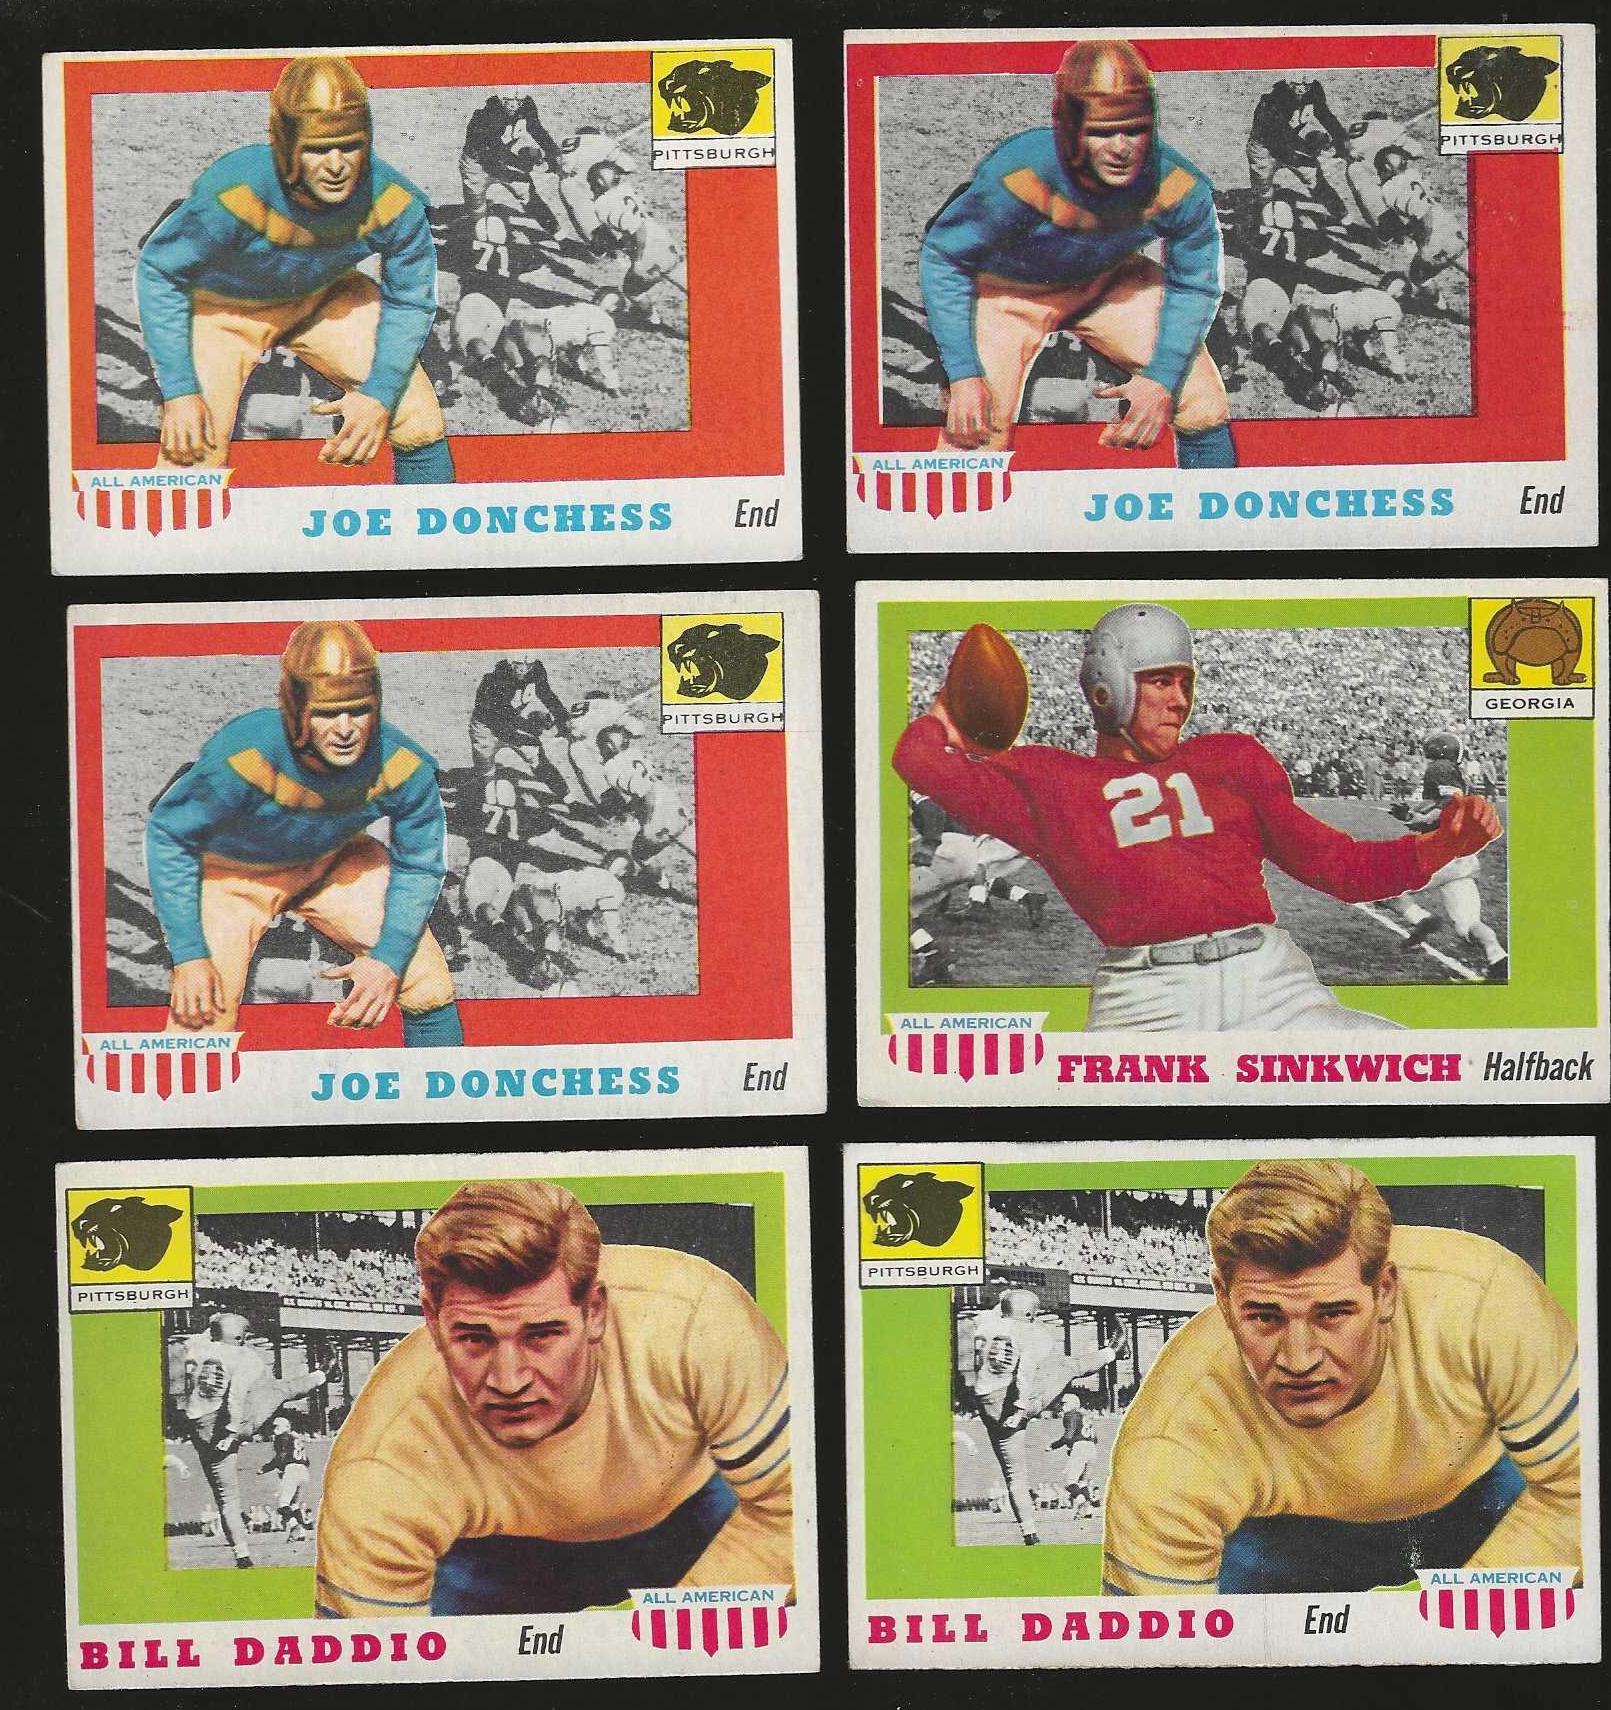 1955 Topps ALL-AMERICAN FB # 65 Joe Donchess SHORT PRINT (Piitsburgh) Football cards value